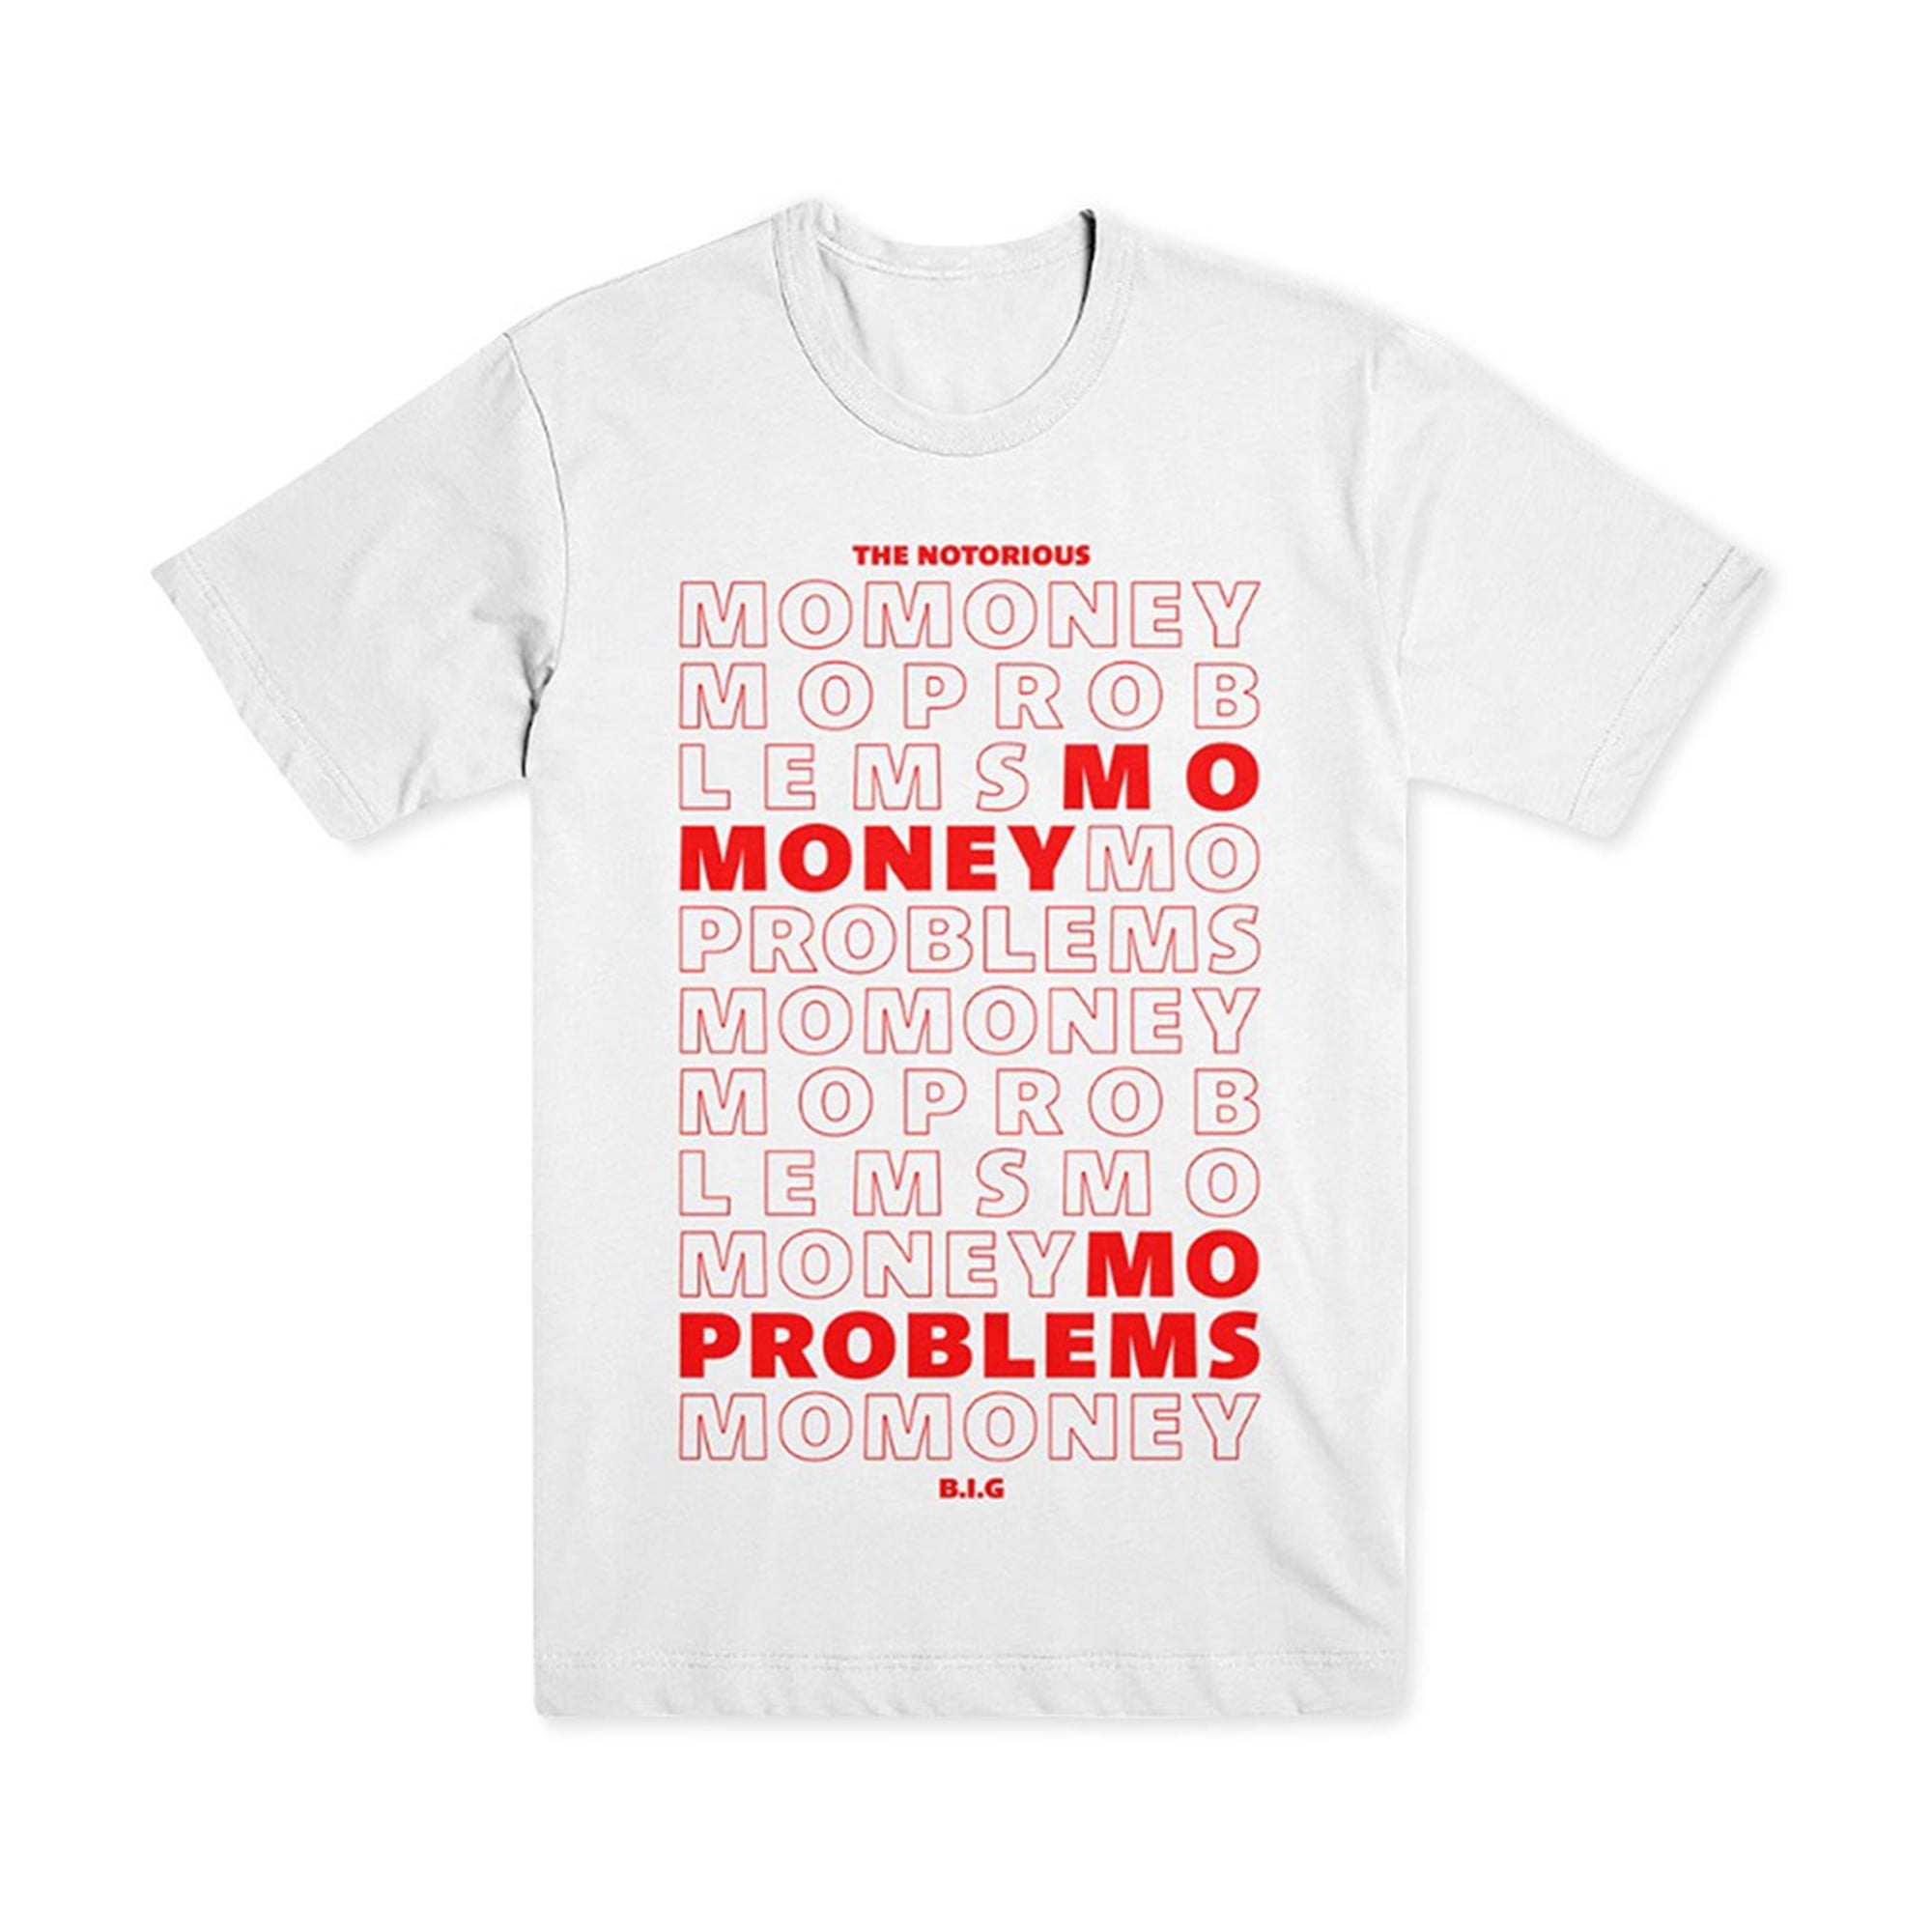 Mo money mo problems tshirt - jazzluda